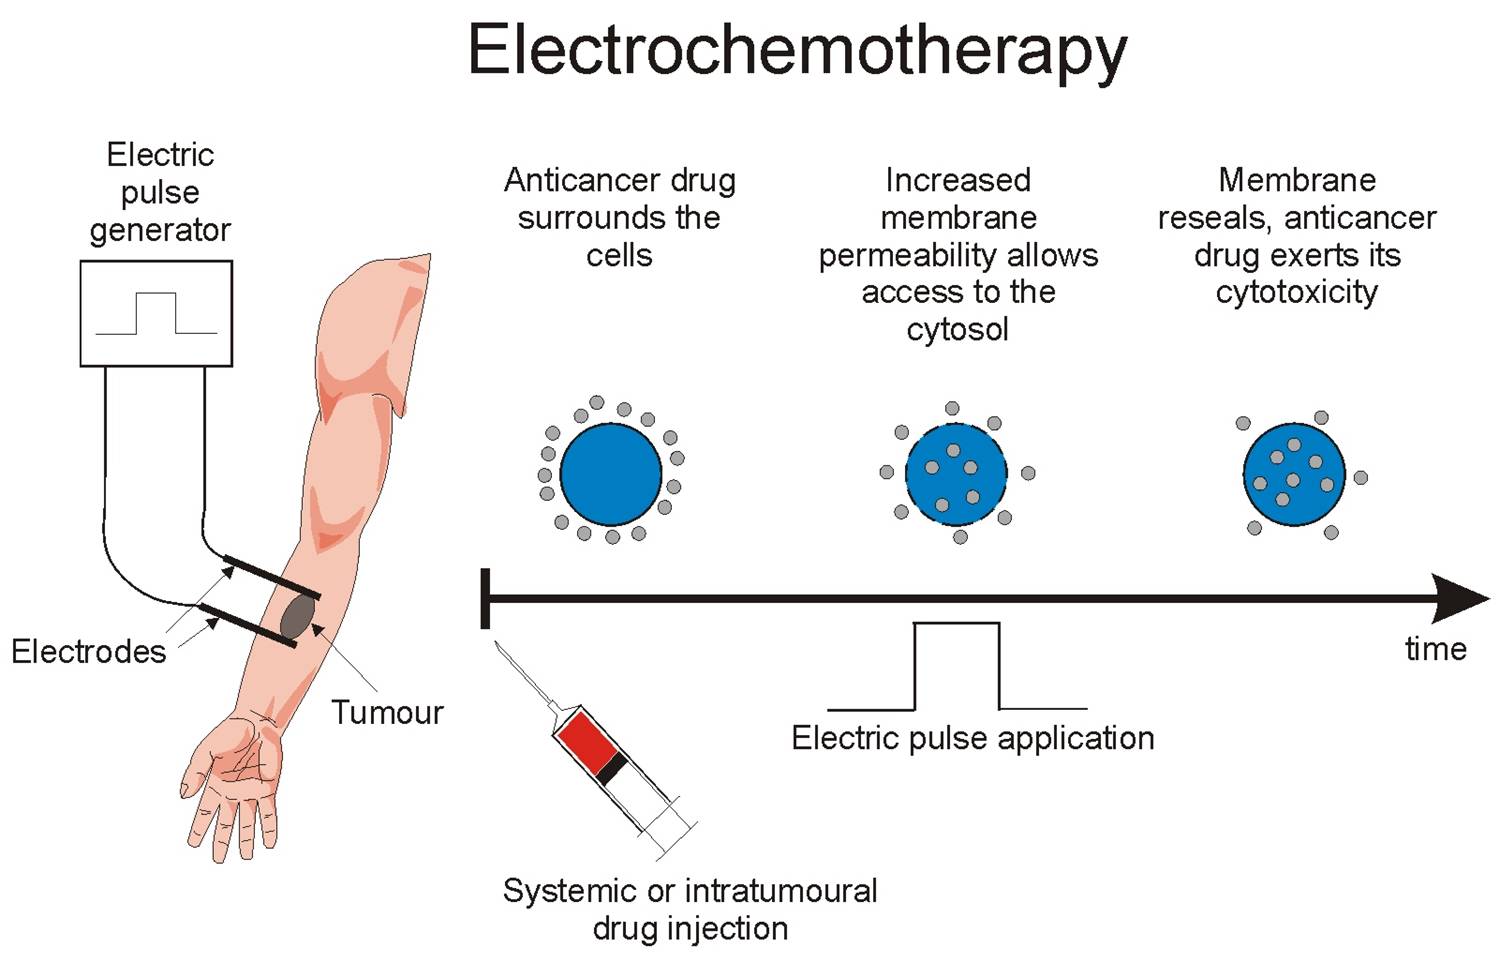 Electroconvulsive therapy - Wikipedia